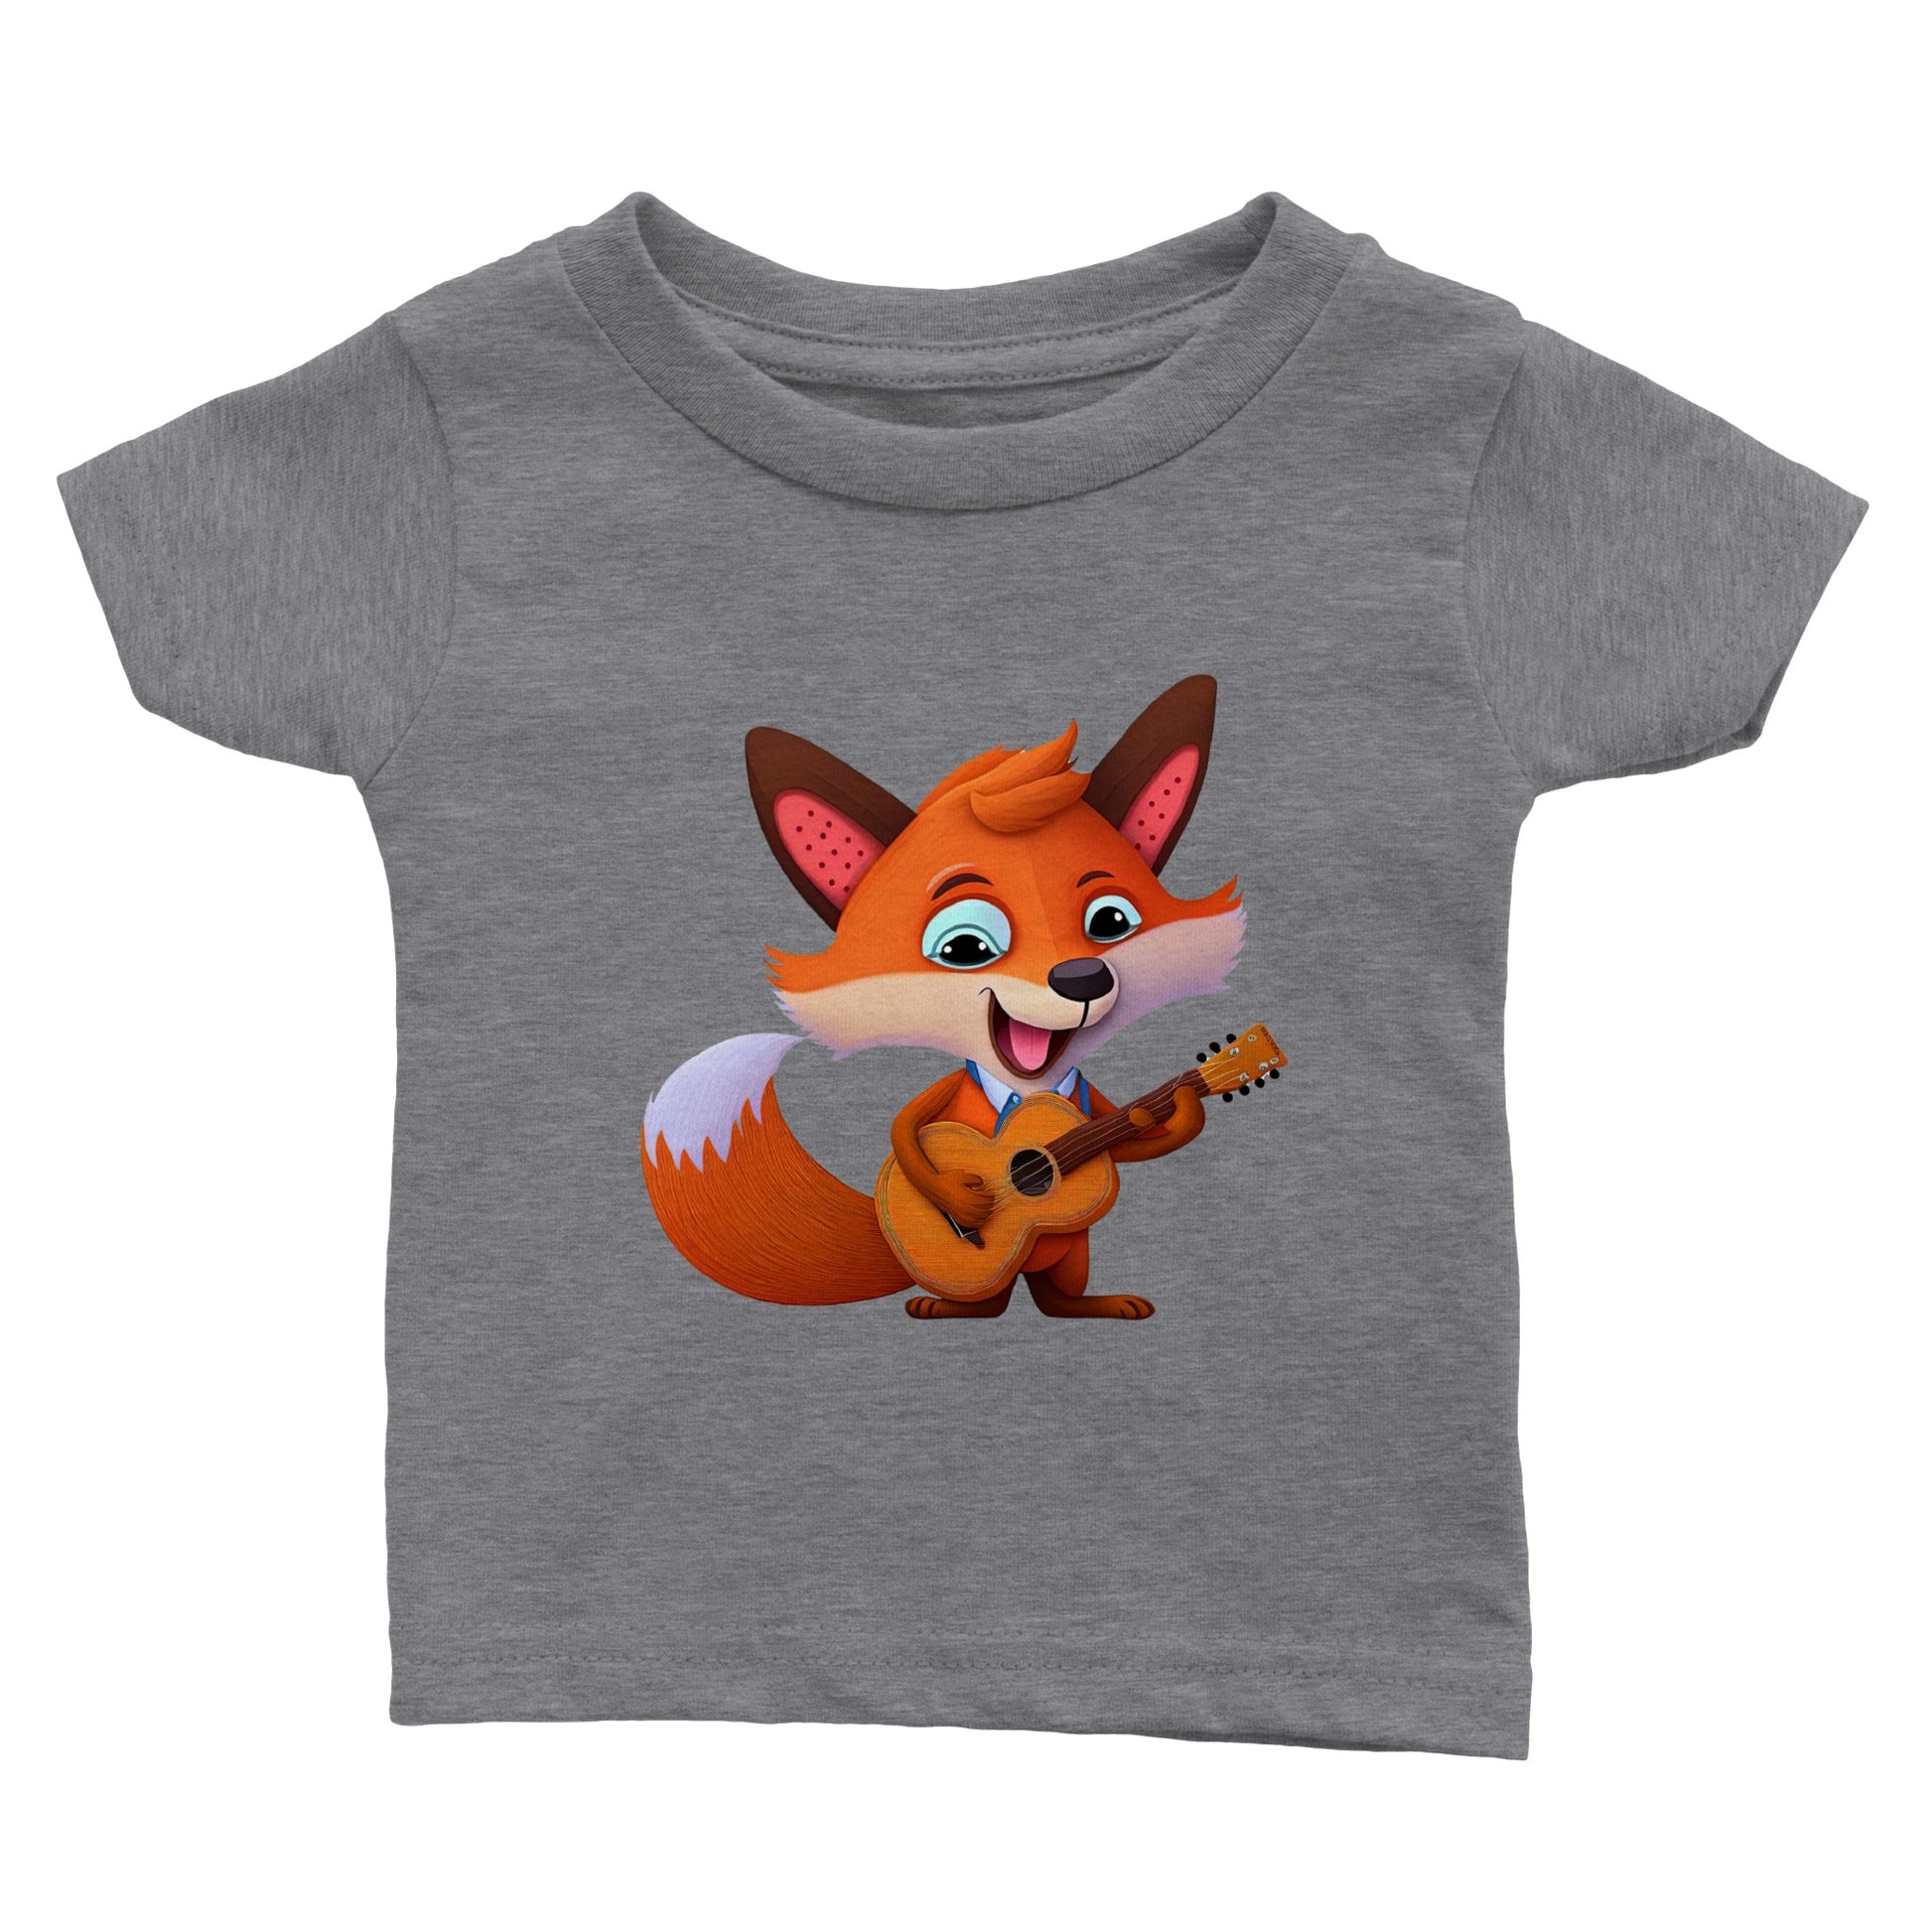 Babies grey t-shirt with cute fox playing a guitar